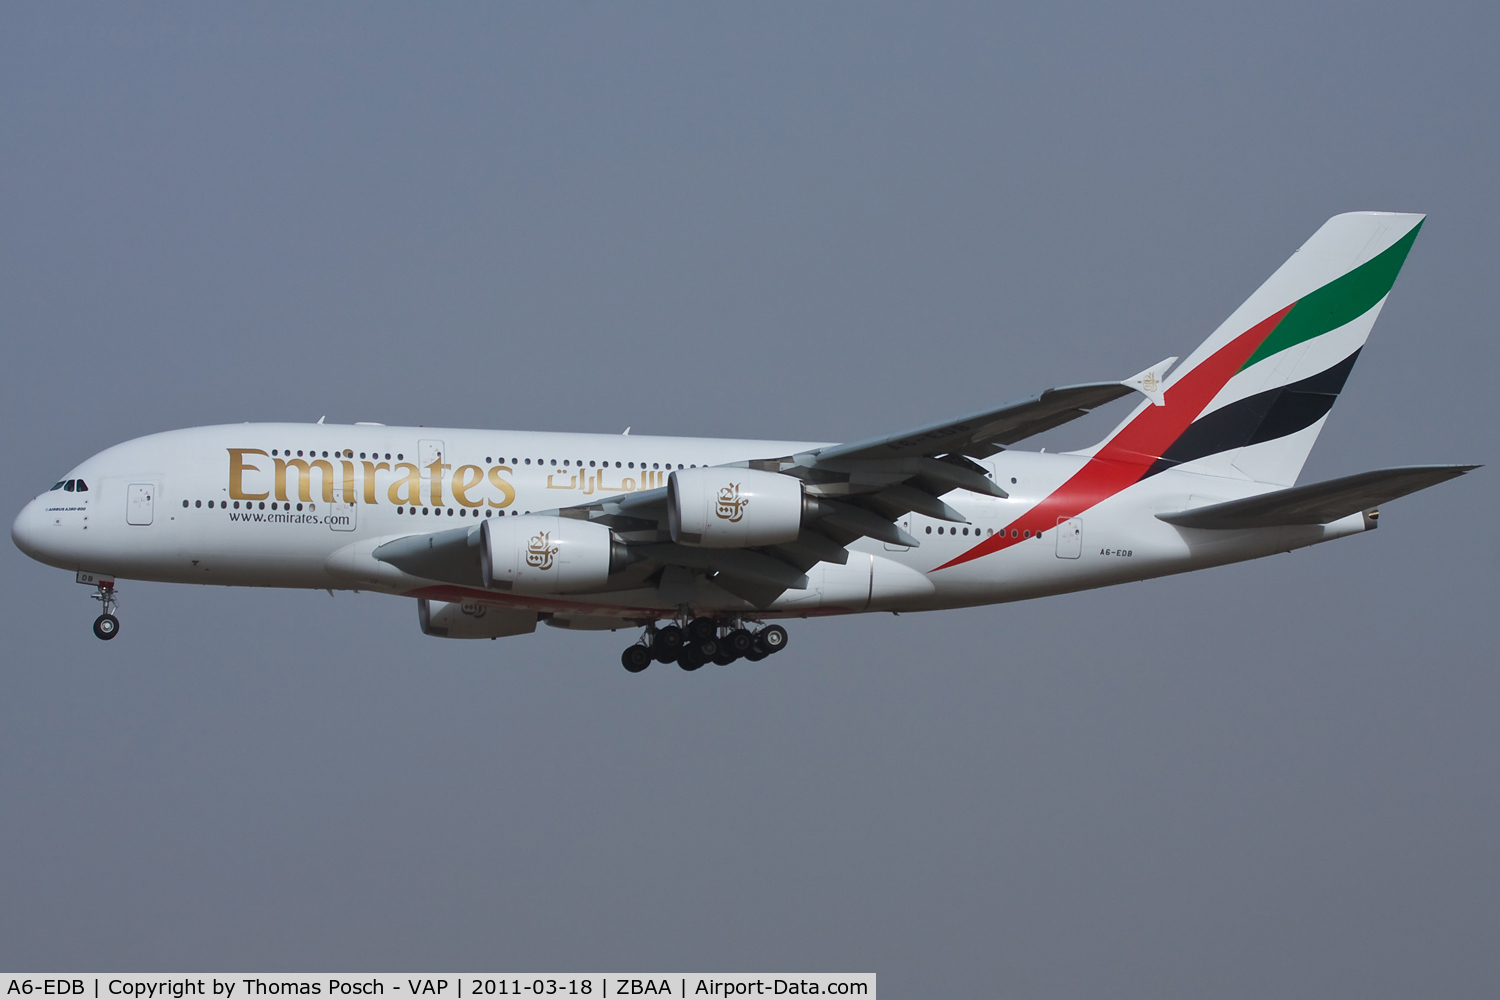 A6-EDB, 2008 Airbus A380-861 C/N 013, Emirates